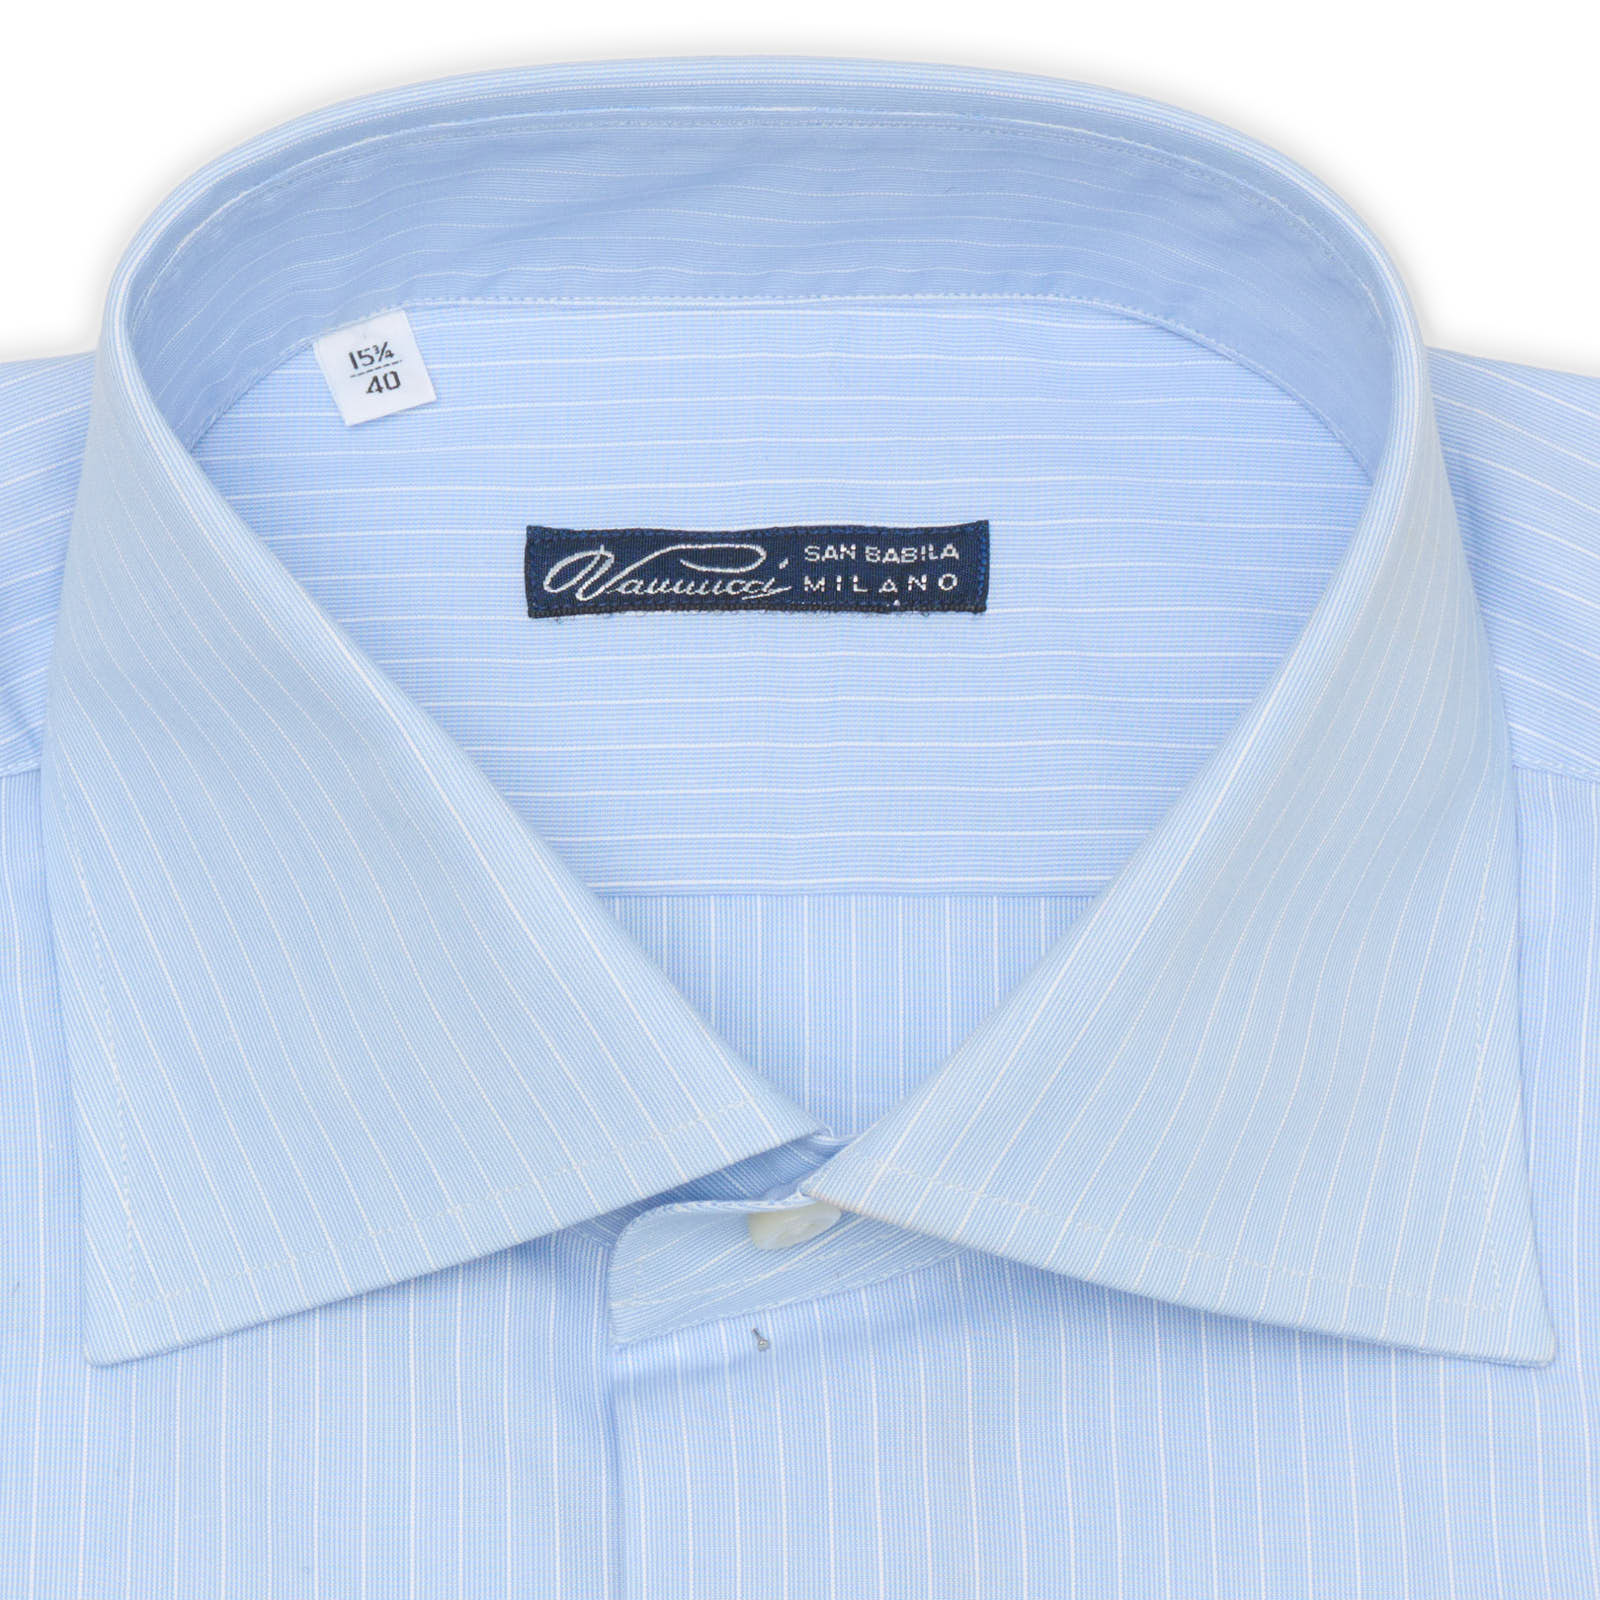 VANNUCCI Milano Blue Striped Cotton French Cuff Dress Shirt EU 40 NEW US 15.75